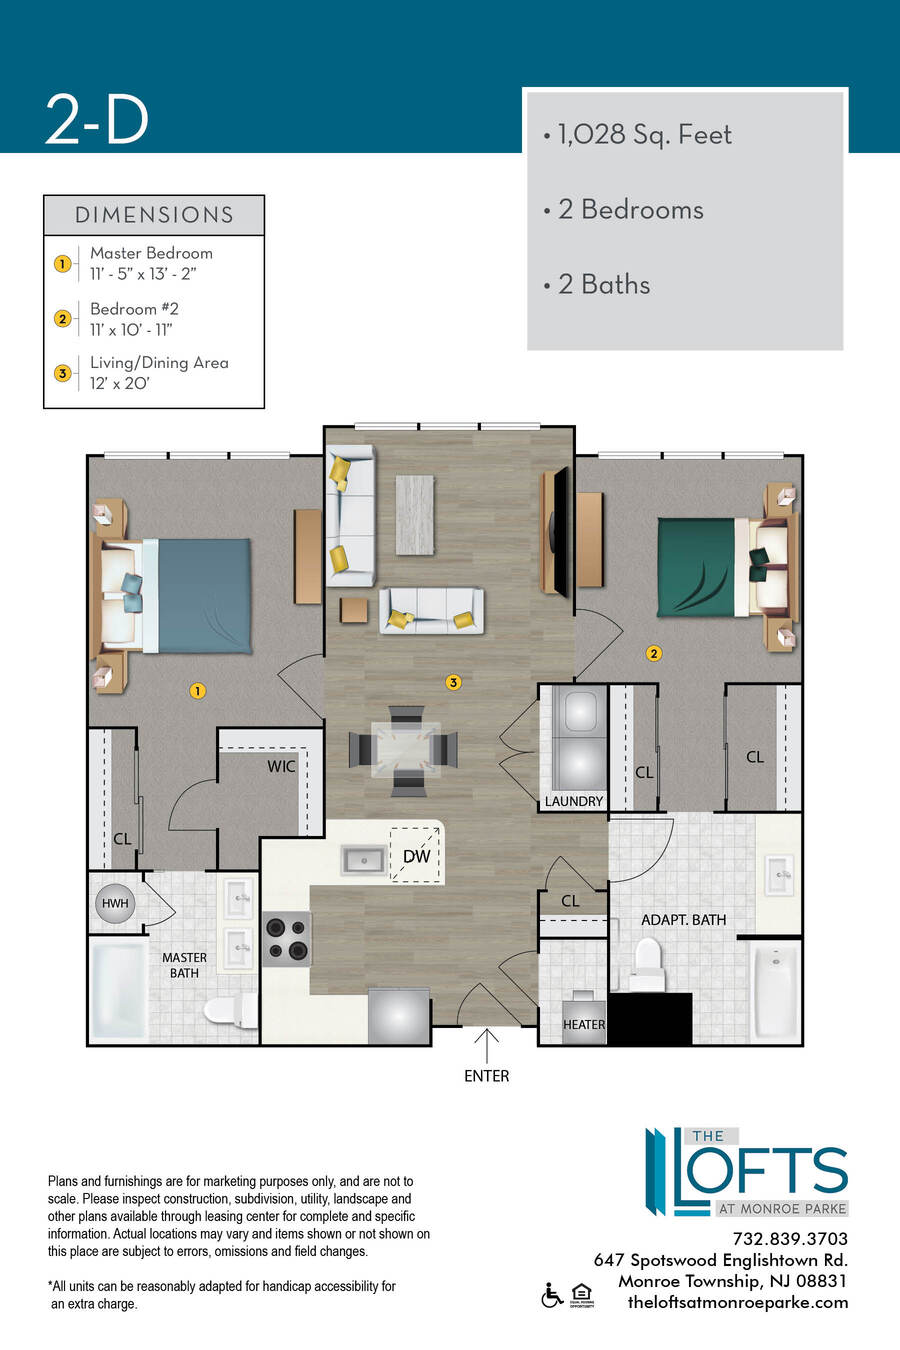 The Lofts at Monroe Park Apartment Floor Plan 2D